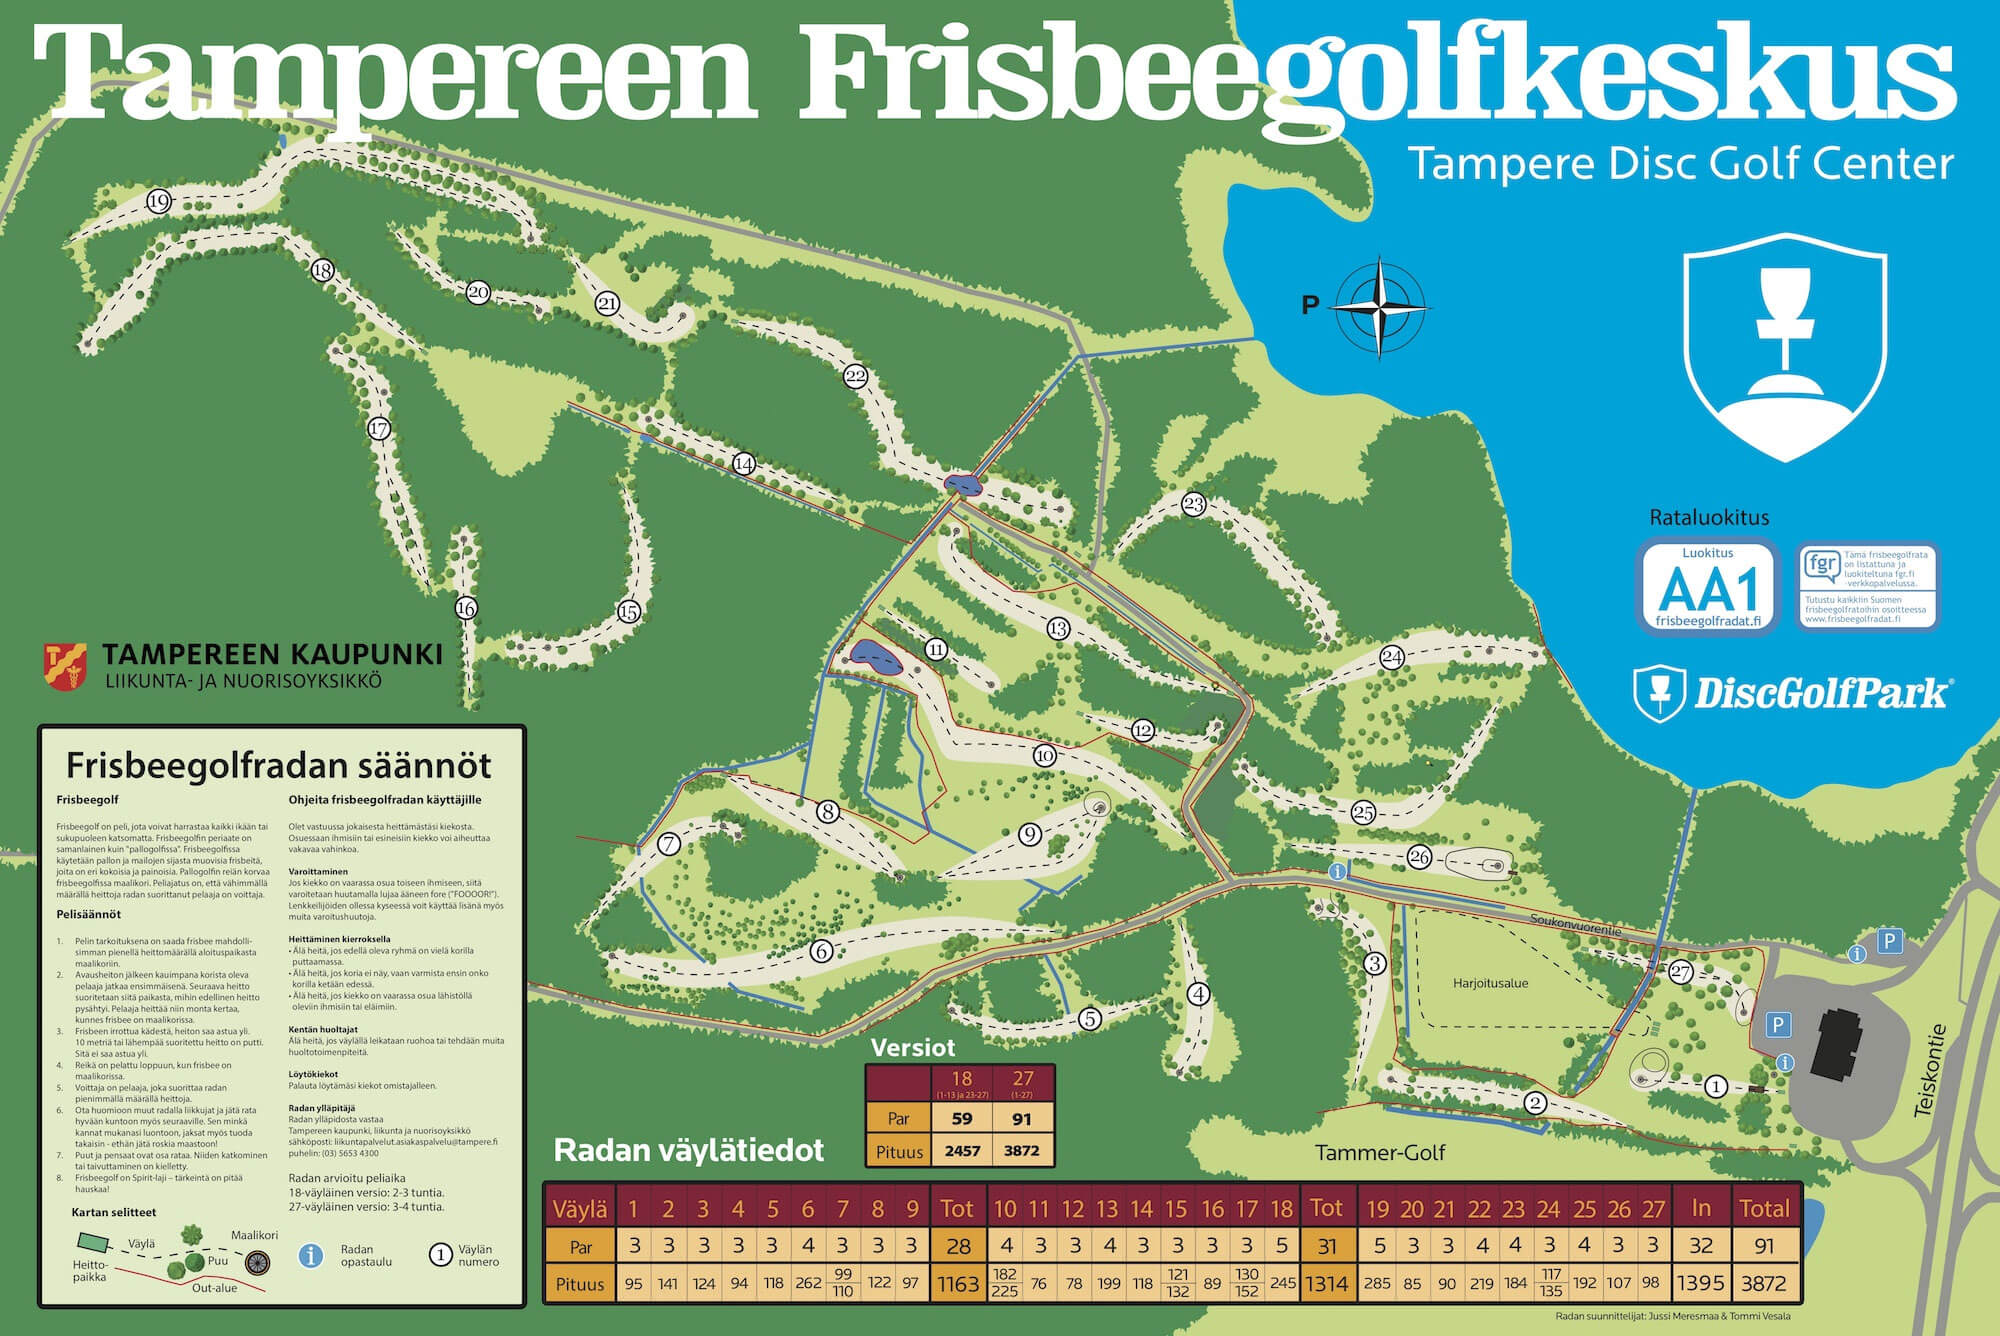 Tampere Frisbeegolf ratakartta